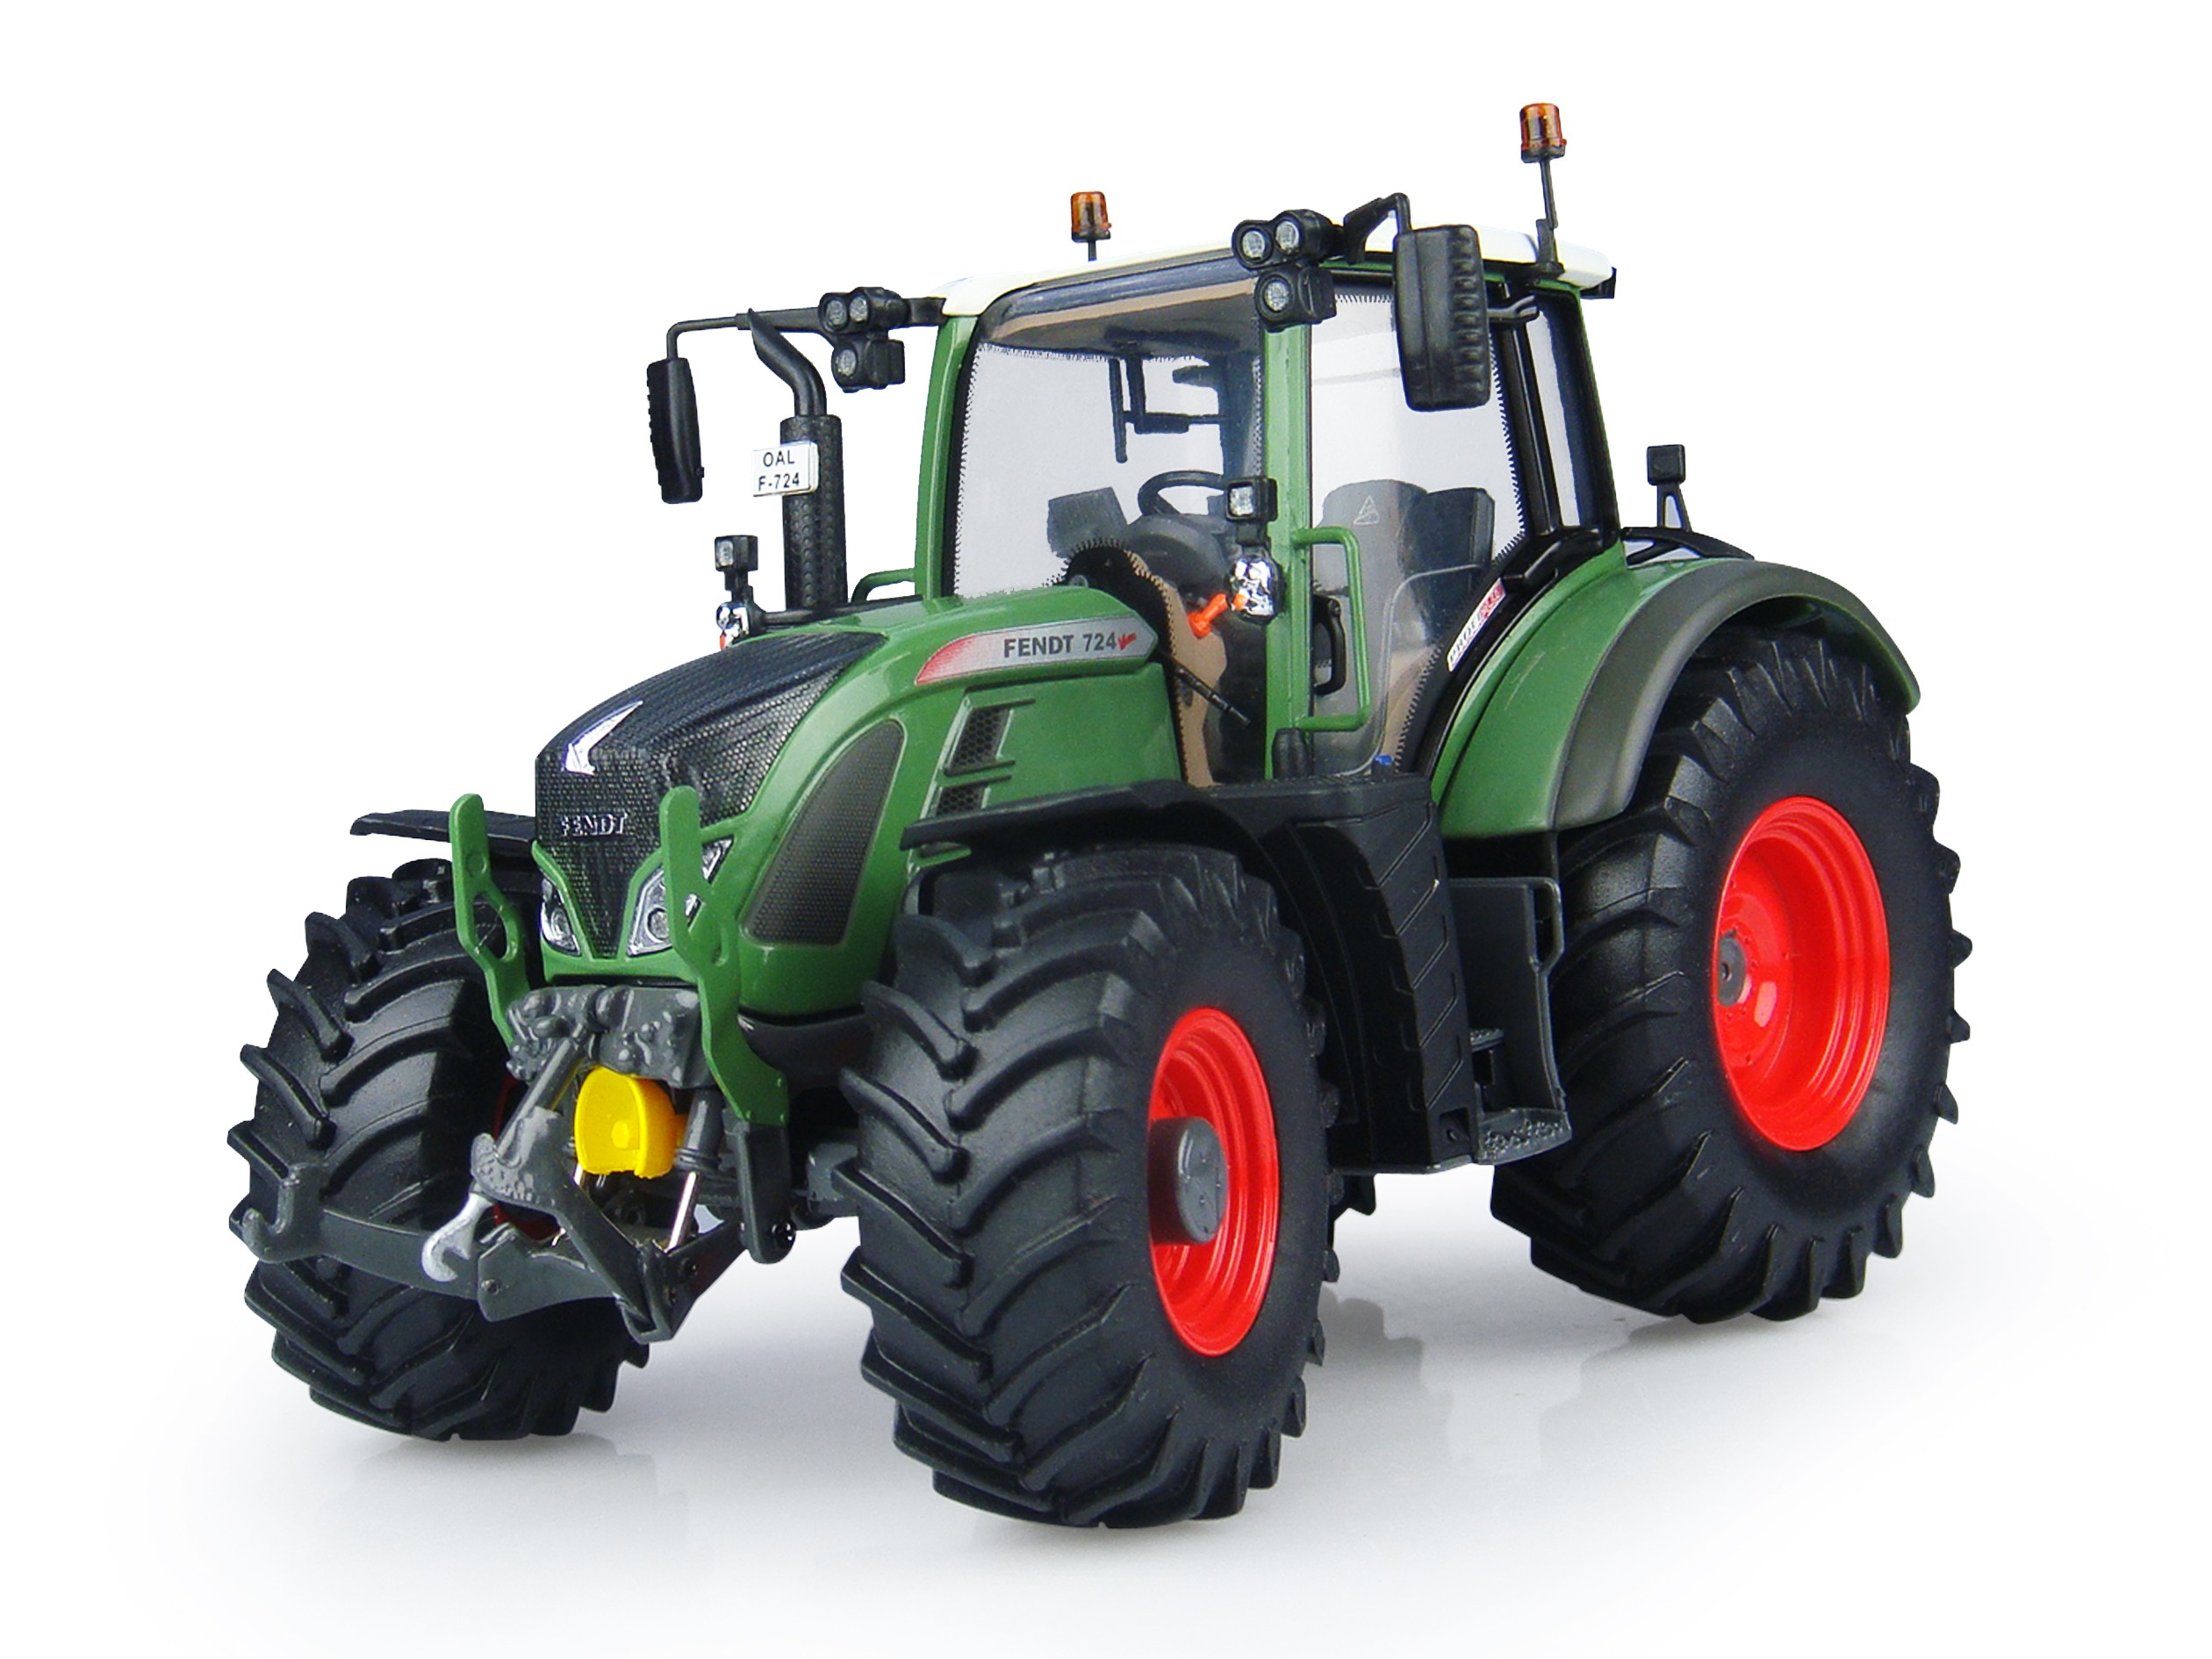 Yüksek kaliteli ayarlama fil Fendt Tractor 700 series 722 6-6.1 222hp